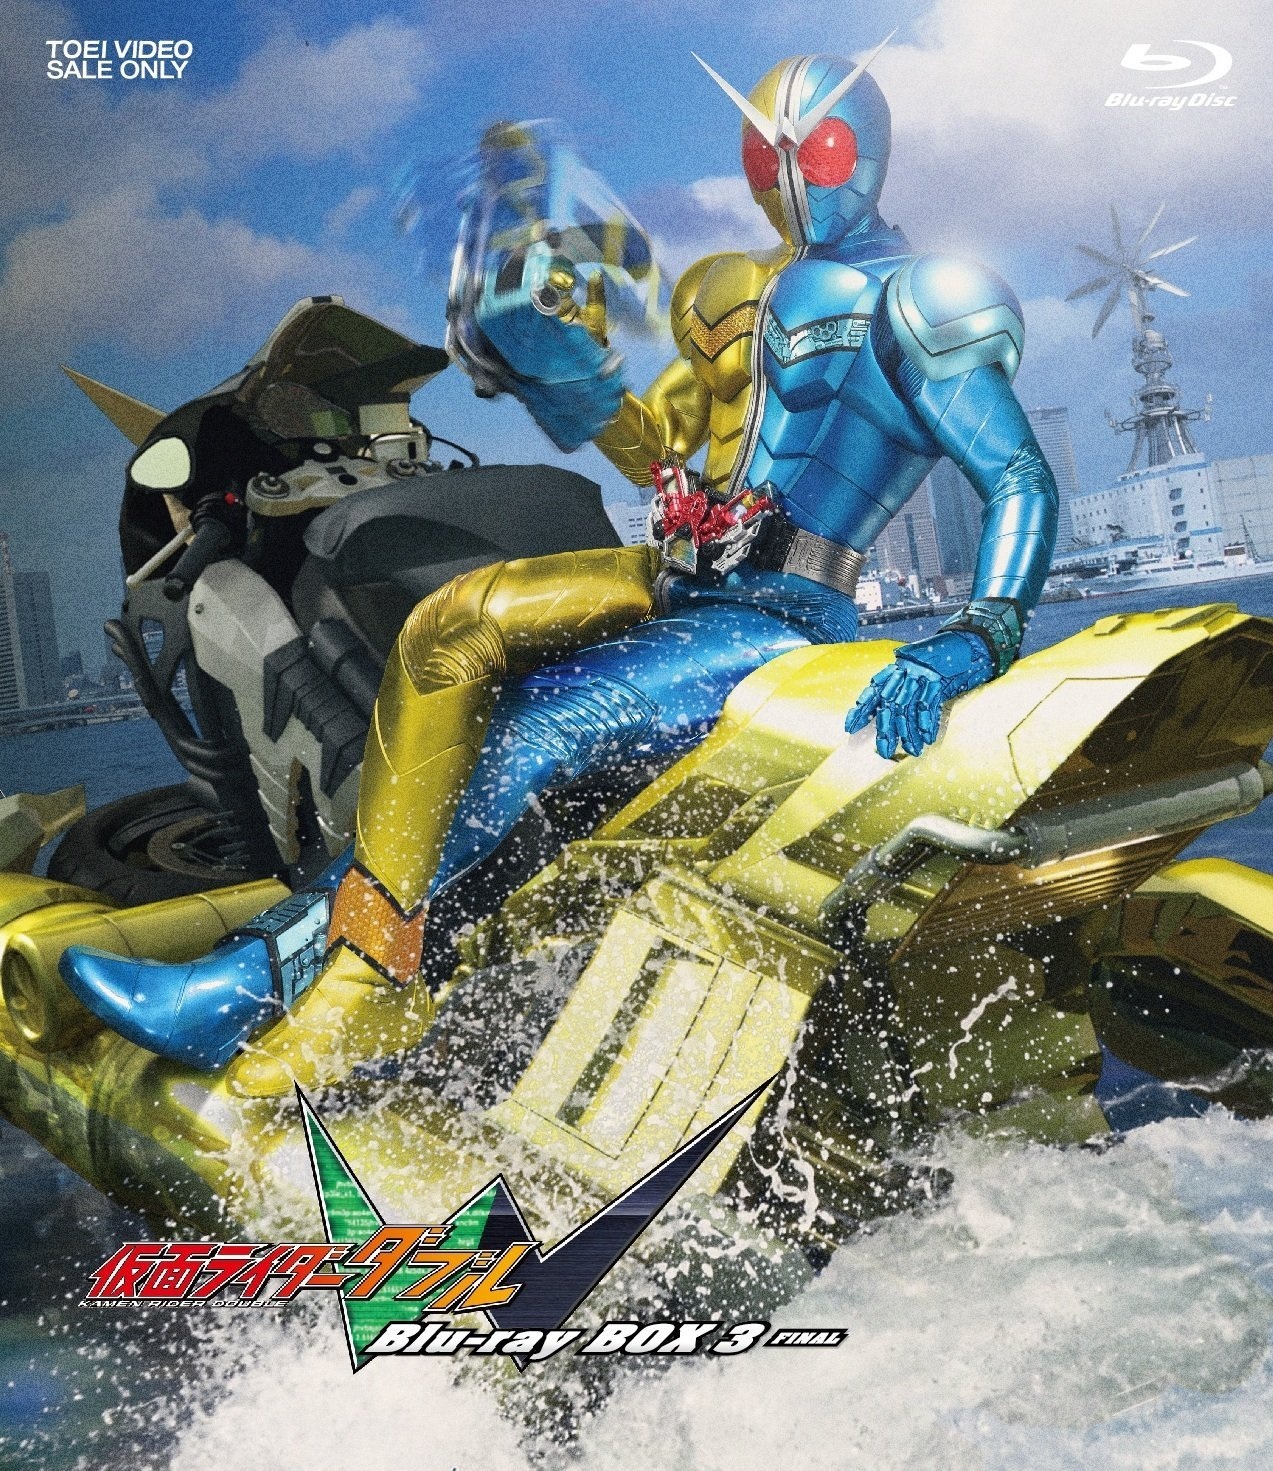 Kamen Rider W: Blu-Ray BOX 3 Blu-ray (仮面ライダーW[ダブル]) (Japan)